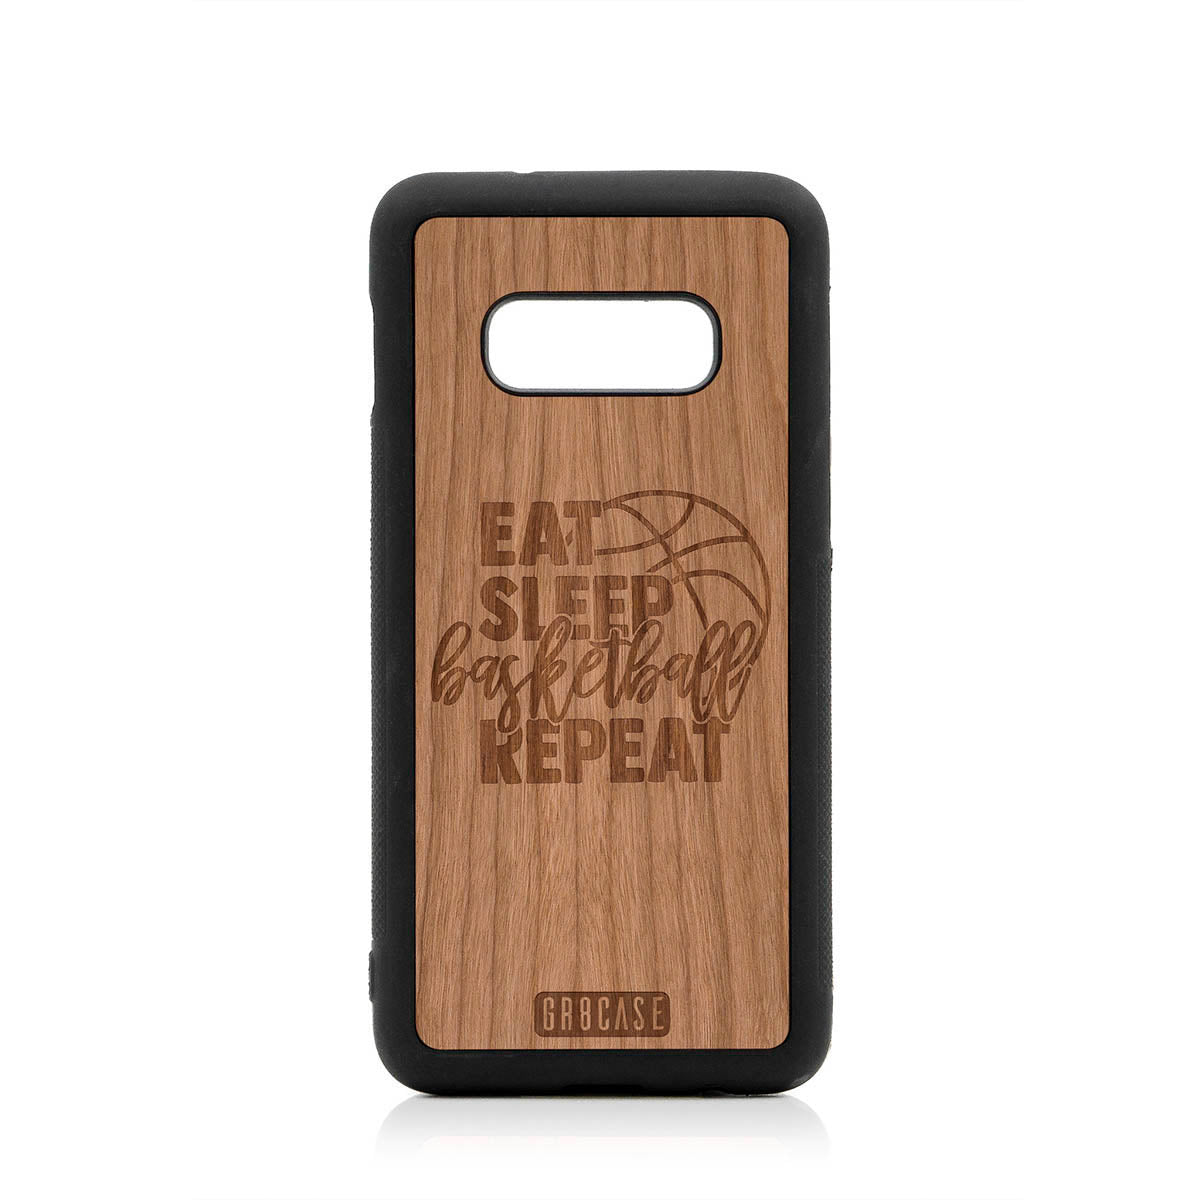 Eat Sleep Basketball Repeat Design Wood Case For Samsung Galaxy S10E